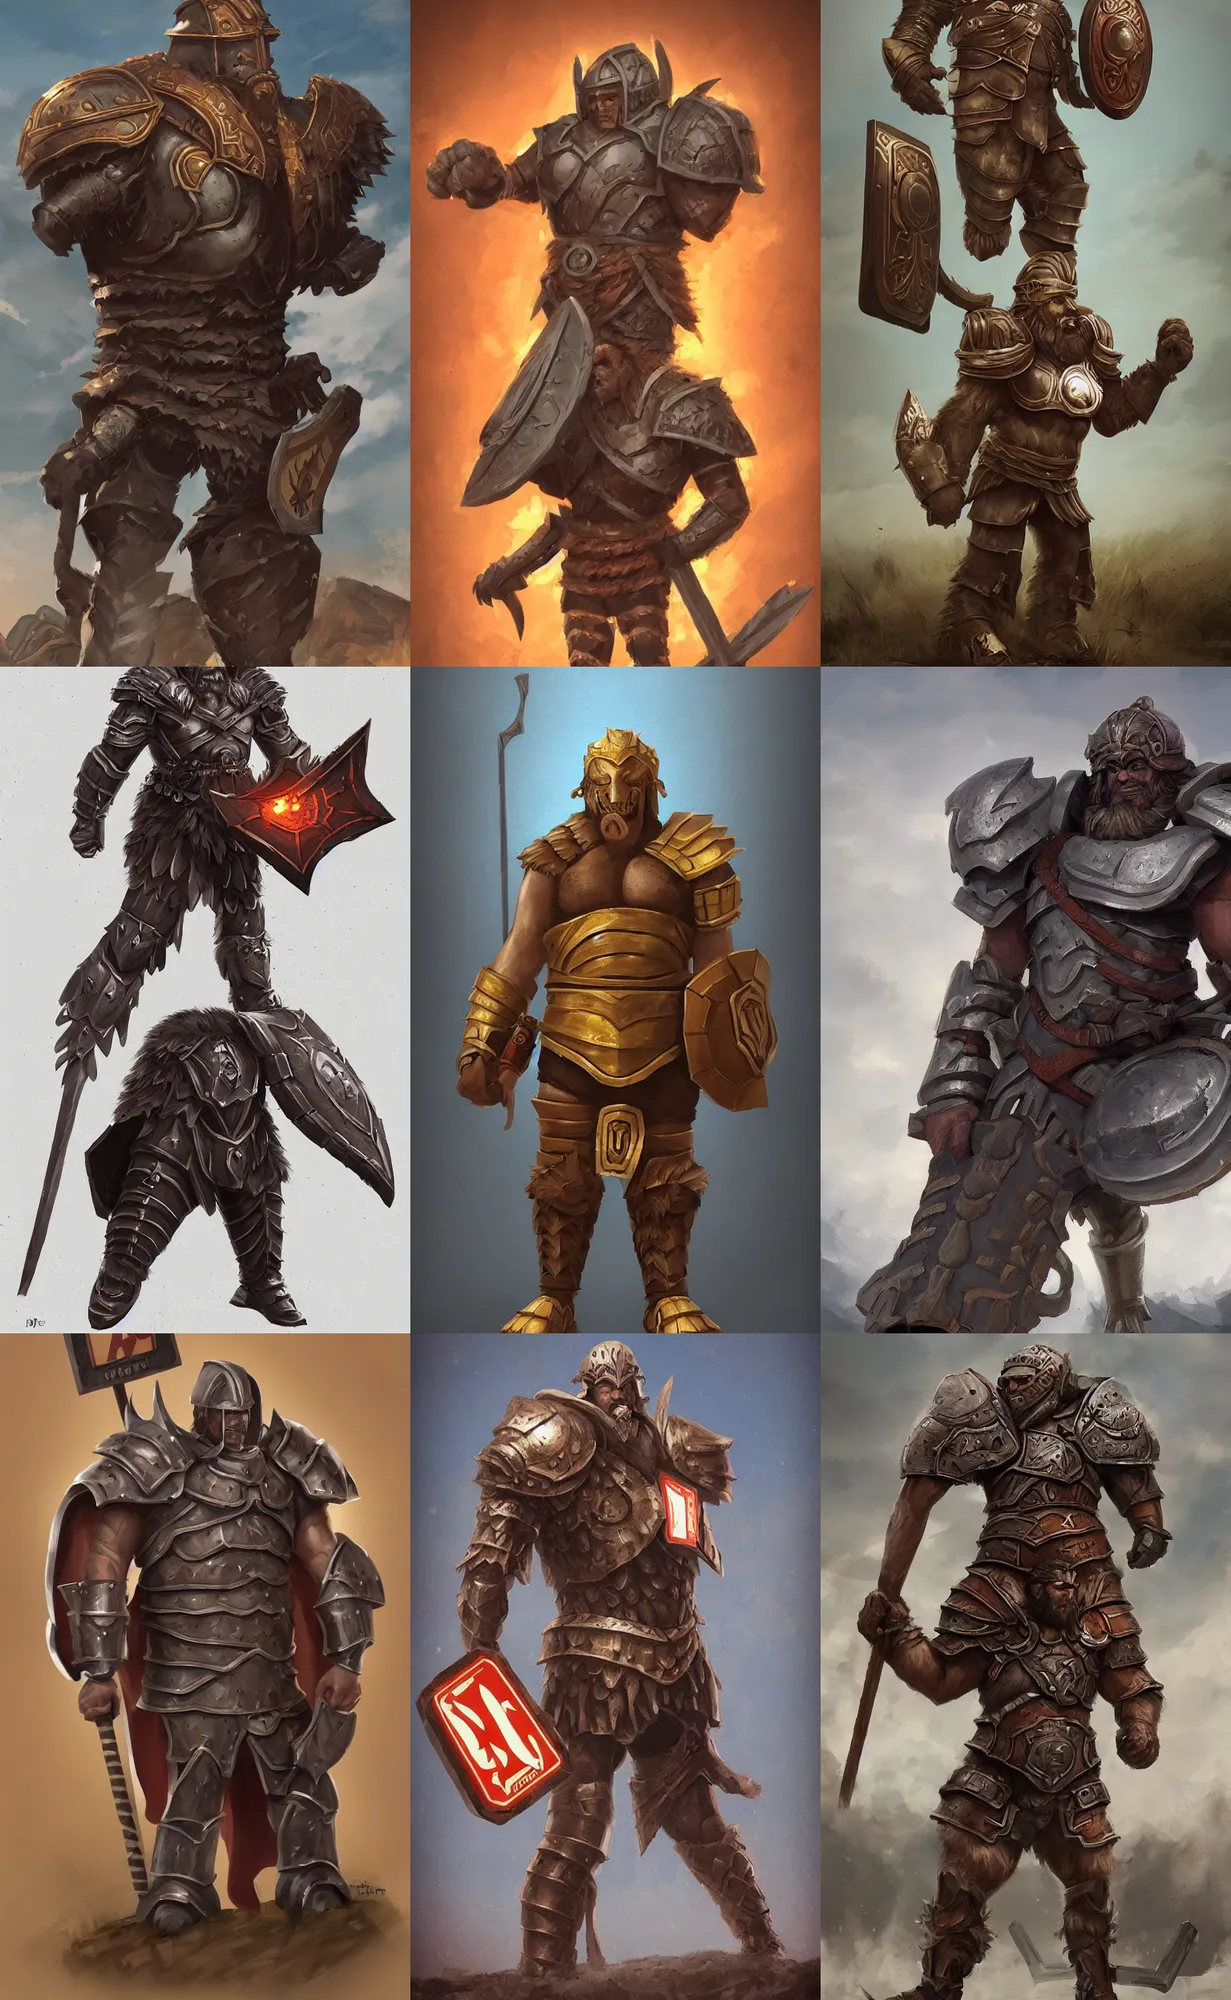 Prompt: giant gladiator wearing road sign armor, d & d, character design trending on artstation